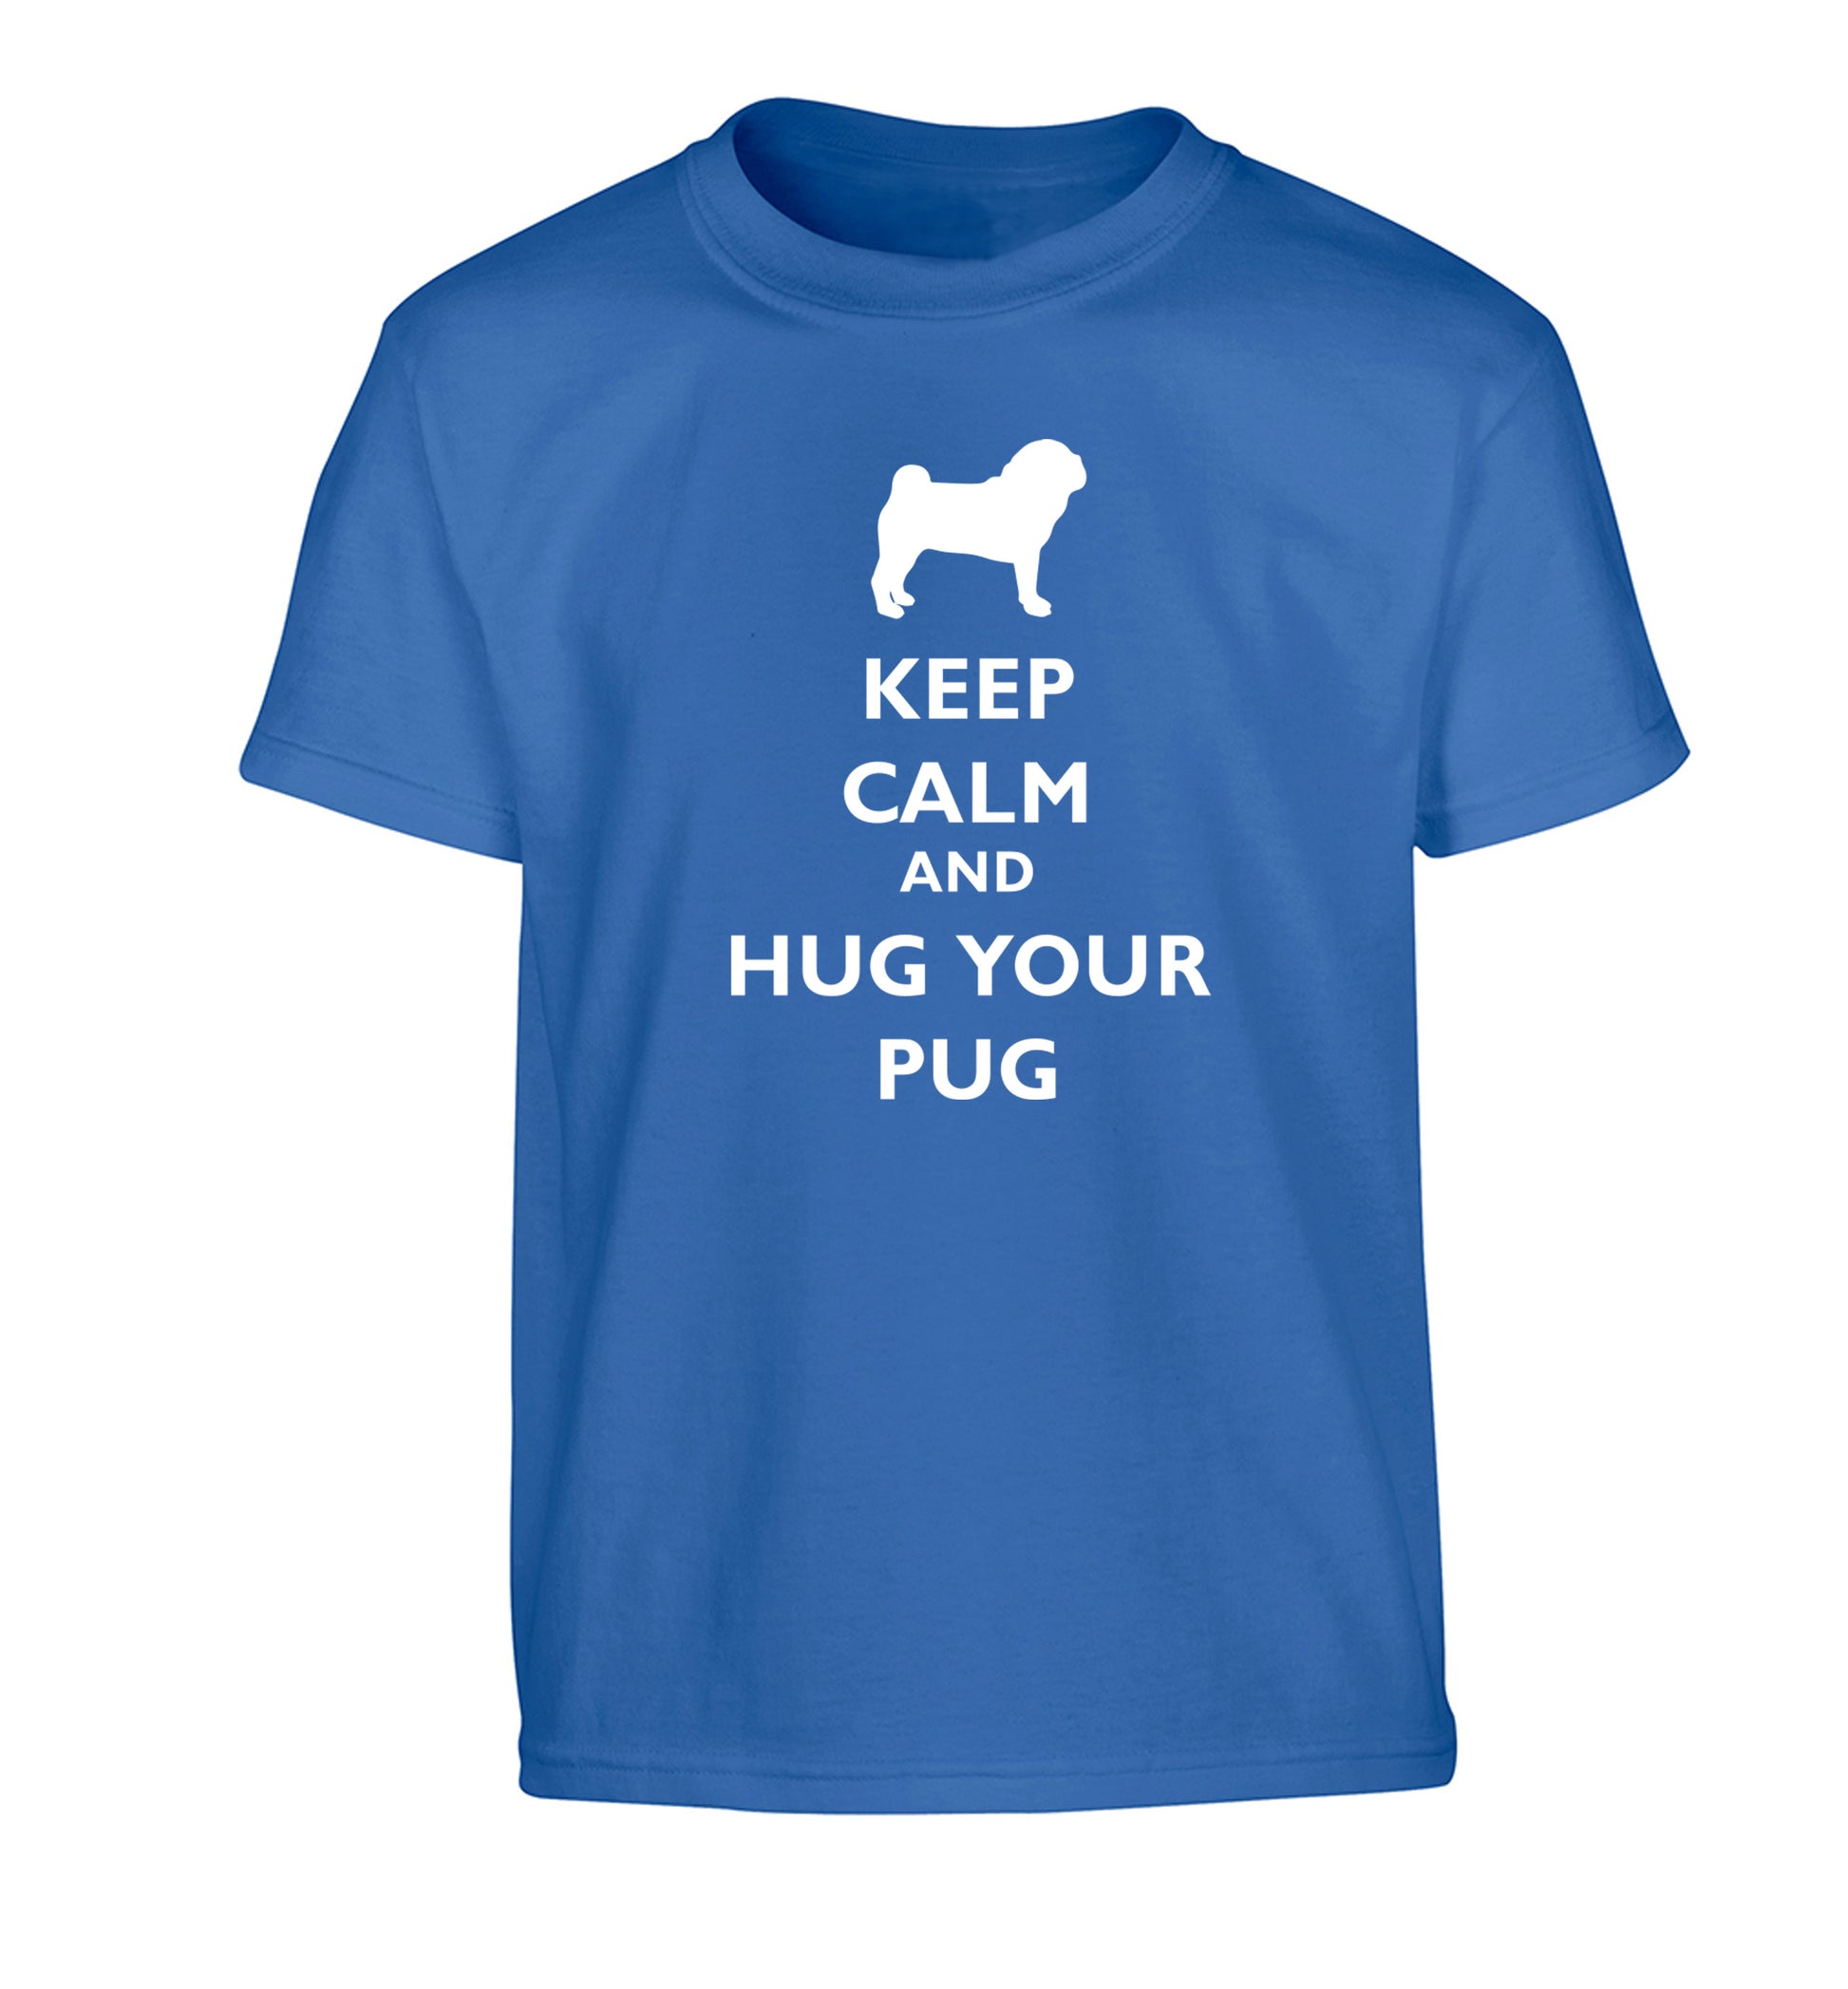 Keep calm and hug your pug Children's blue Tshirt 12-13 Years